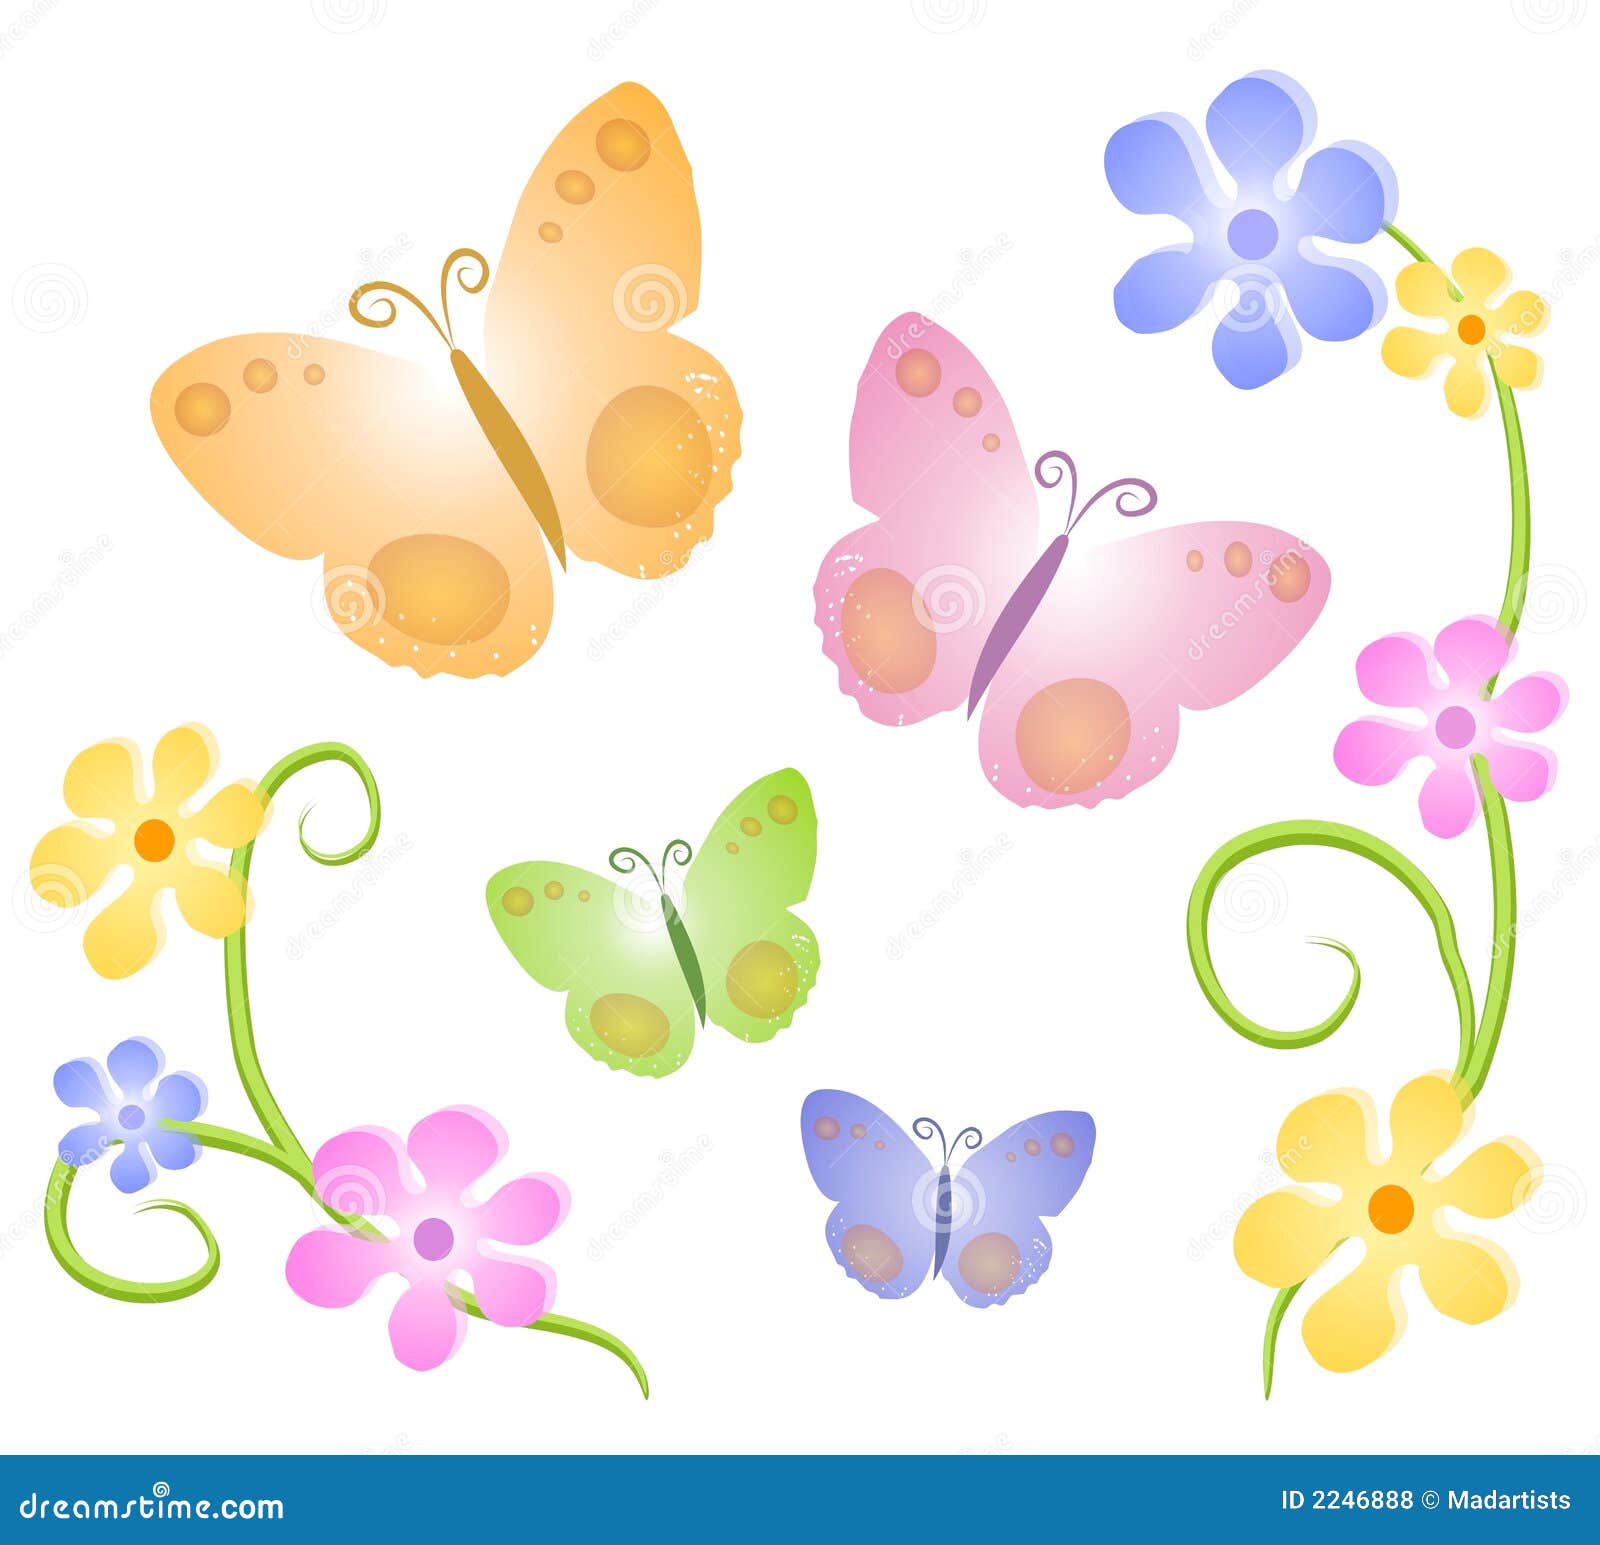 Butterflies Flowers Clip Art 2 Royalty Free Stock Photos ...